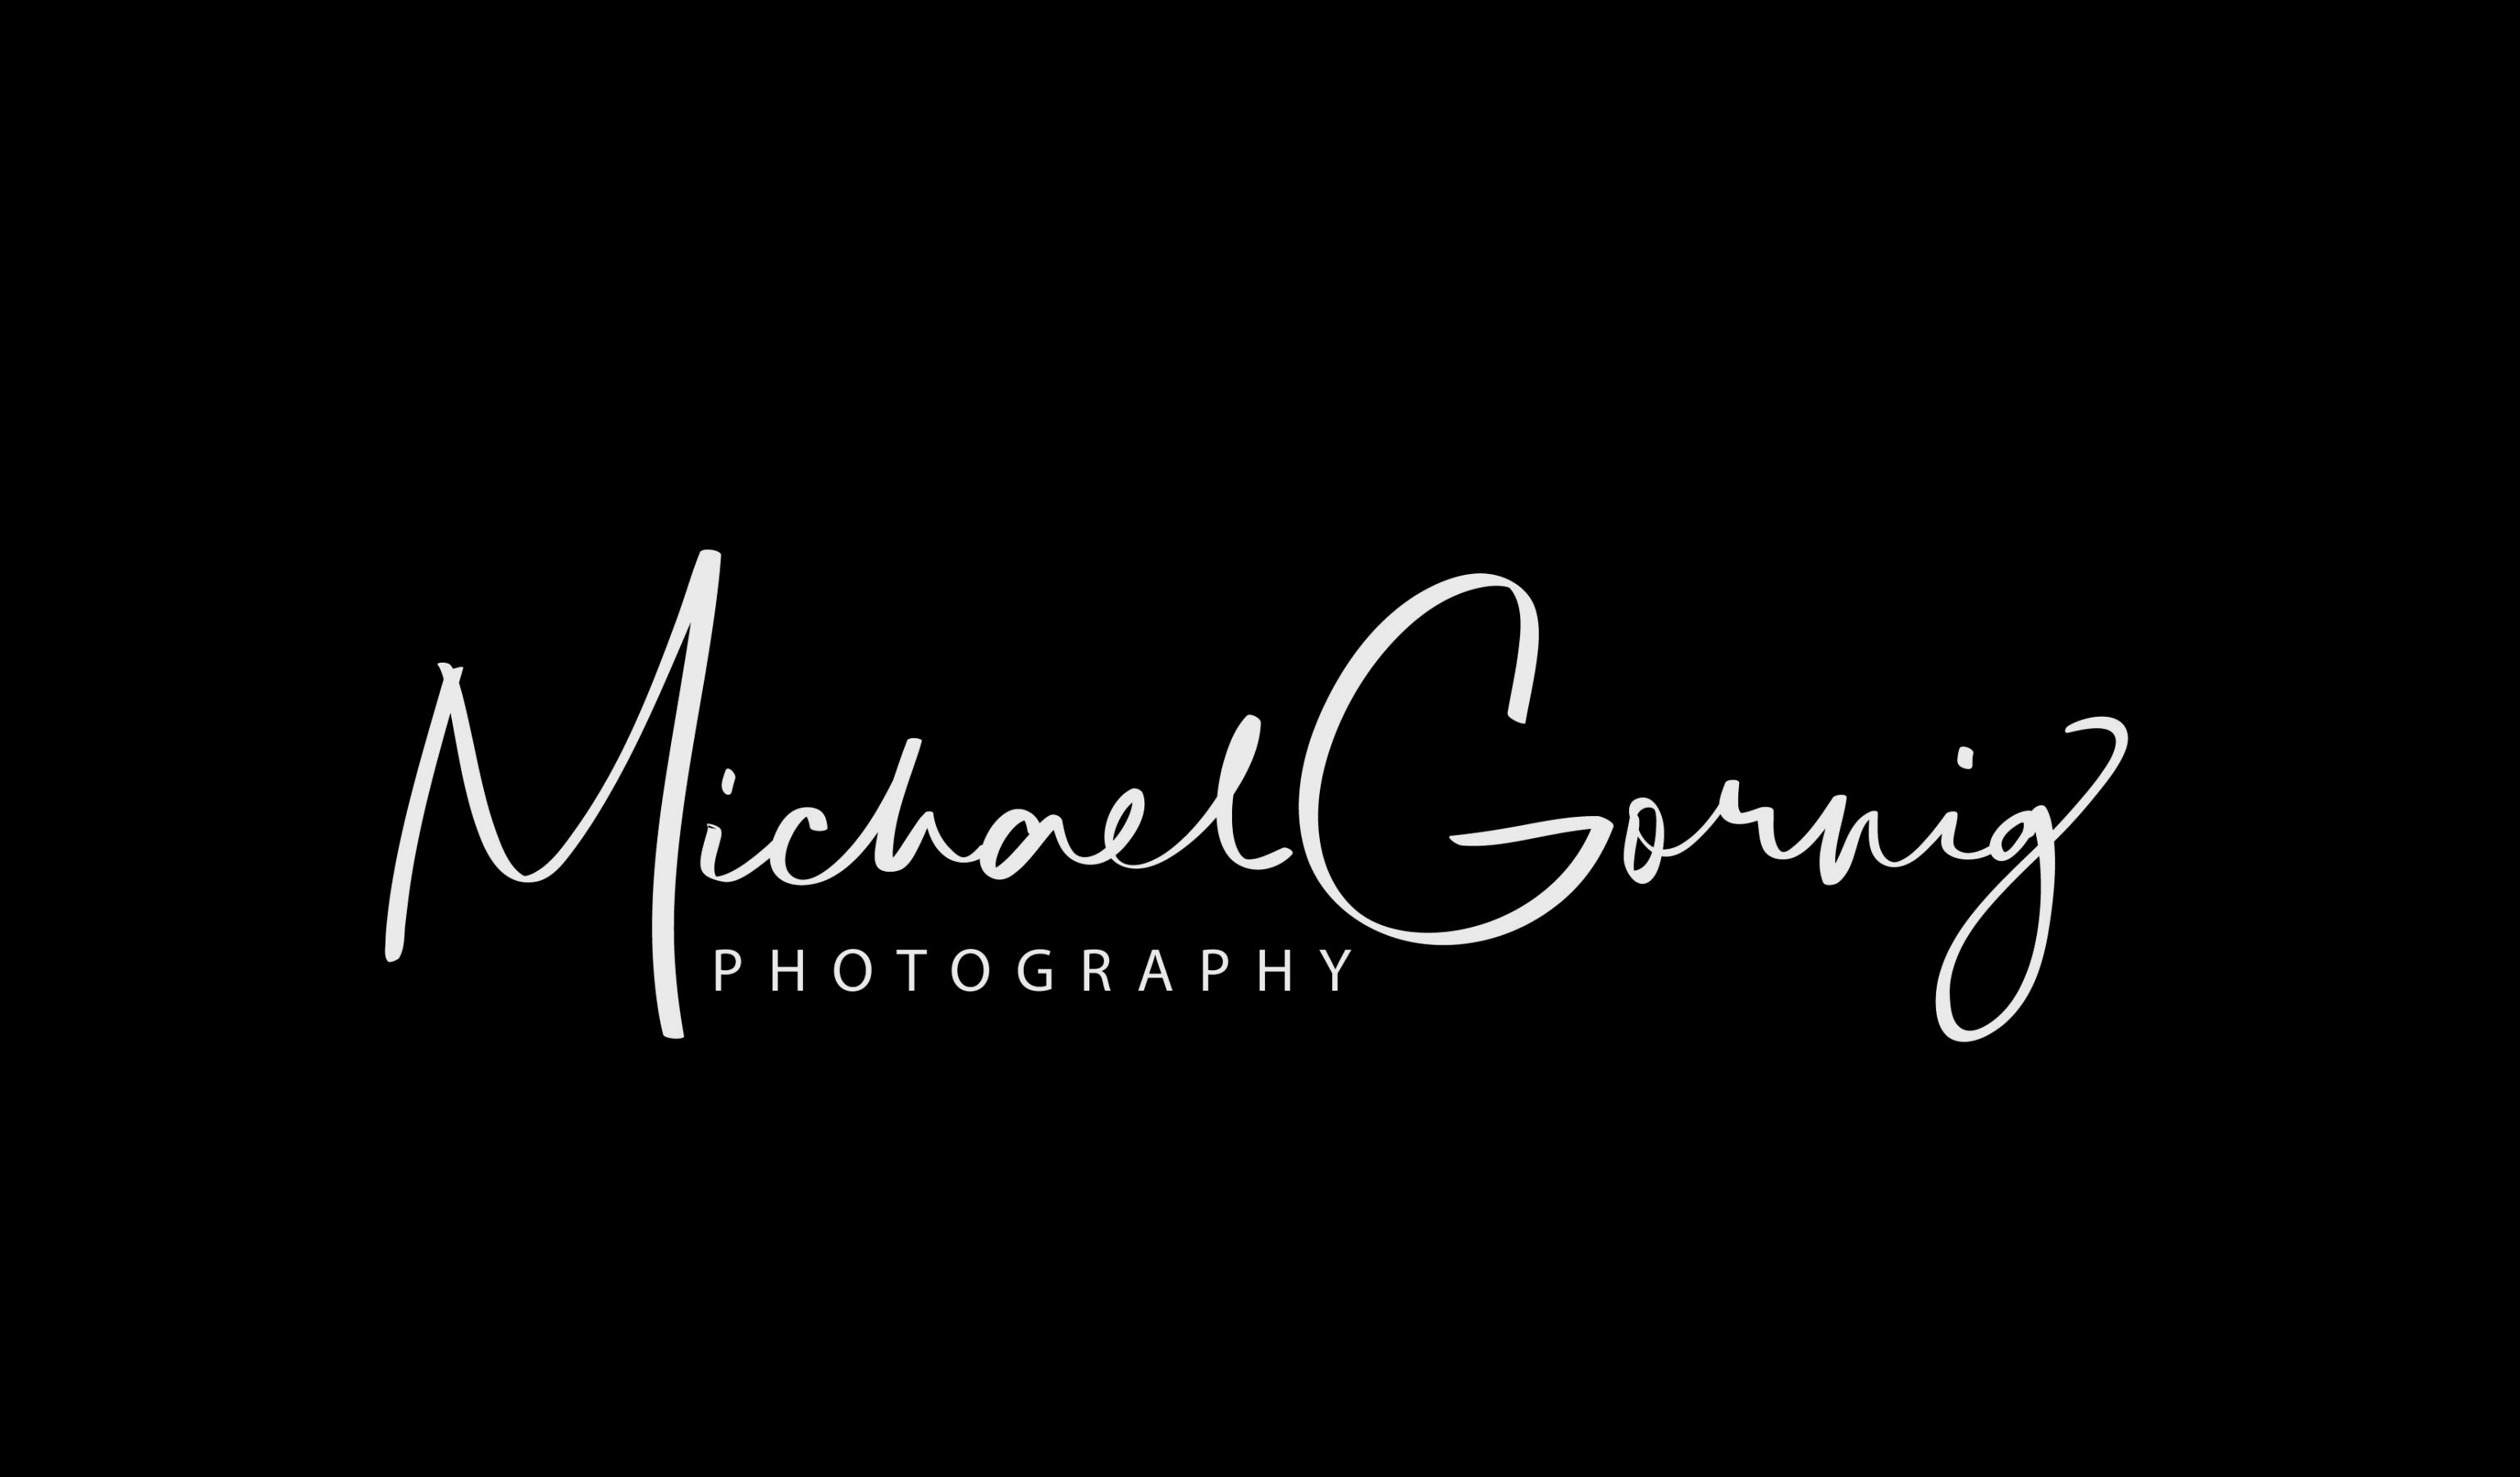 Michael Gornig Photography